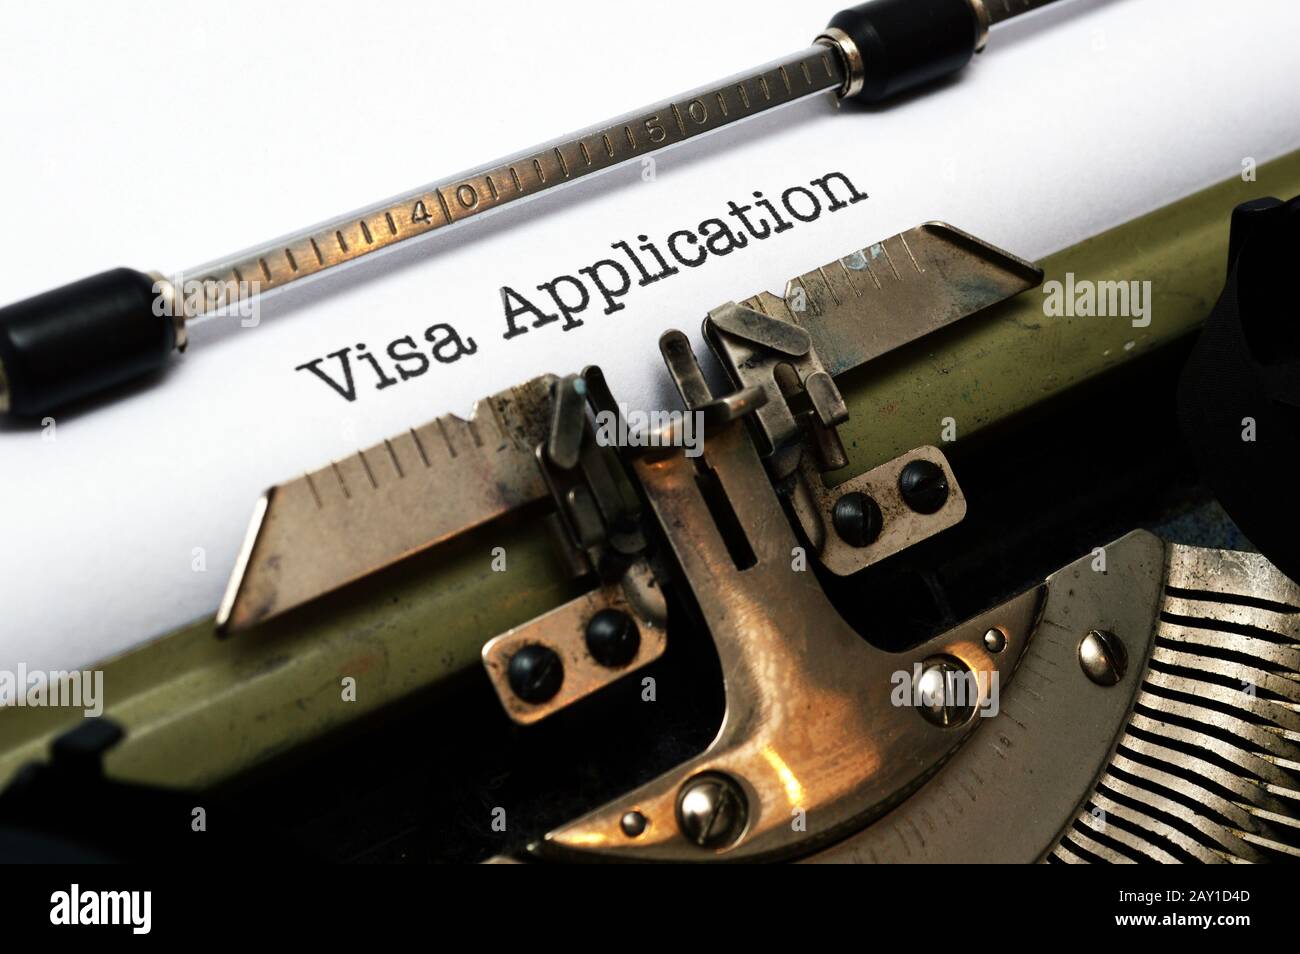 Visa application Stock Photo